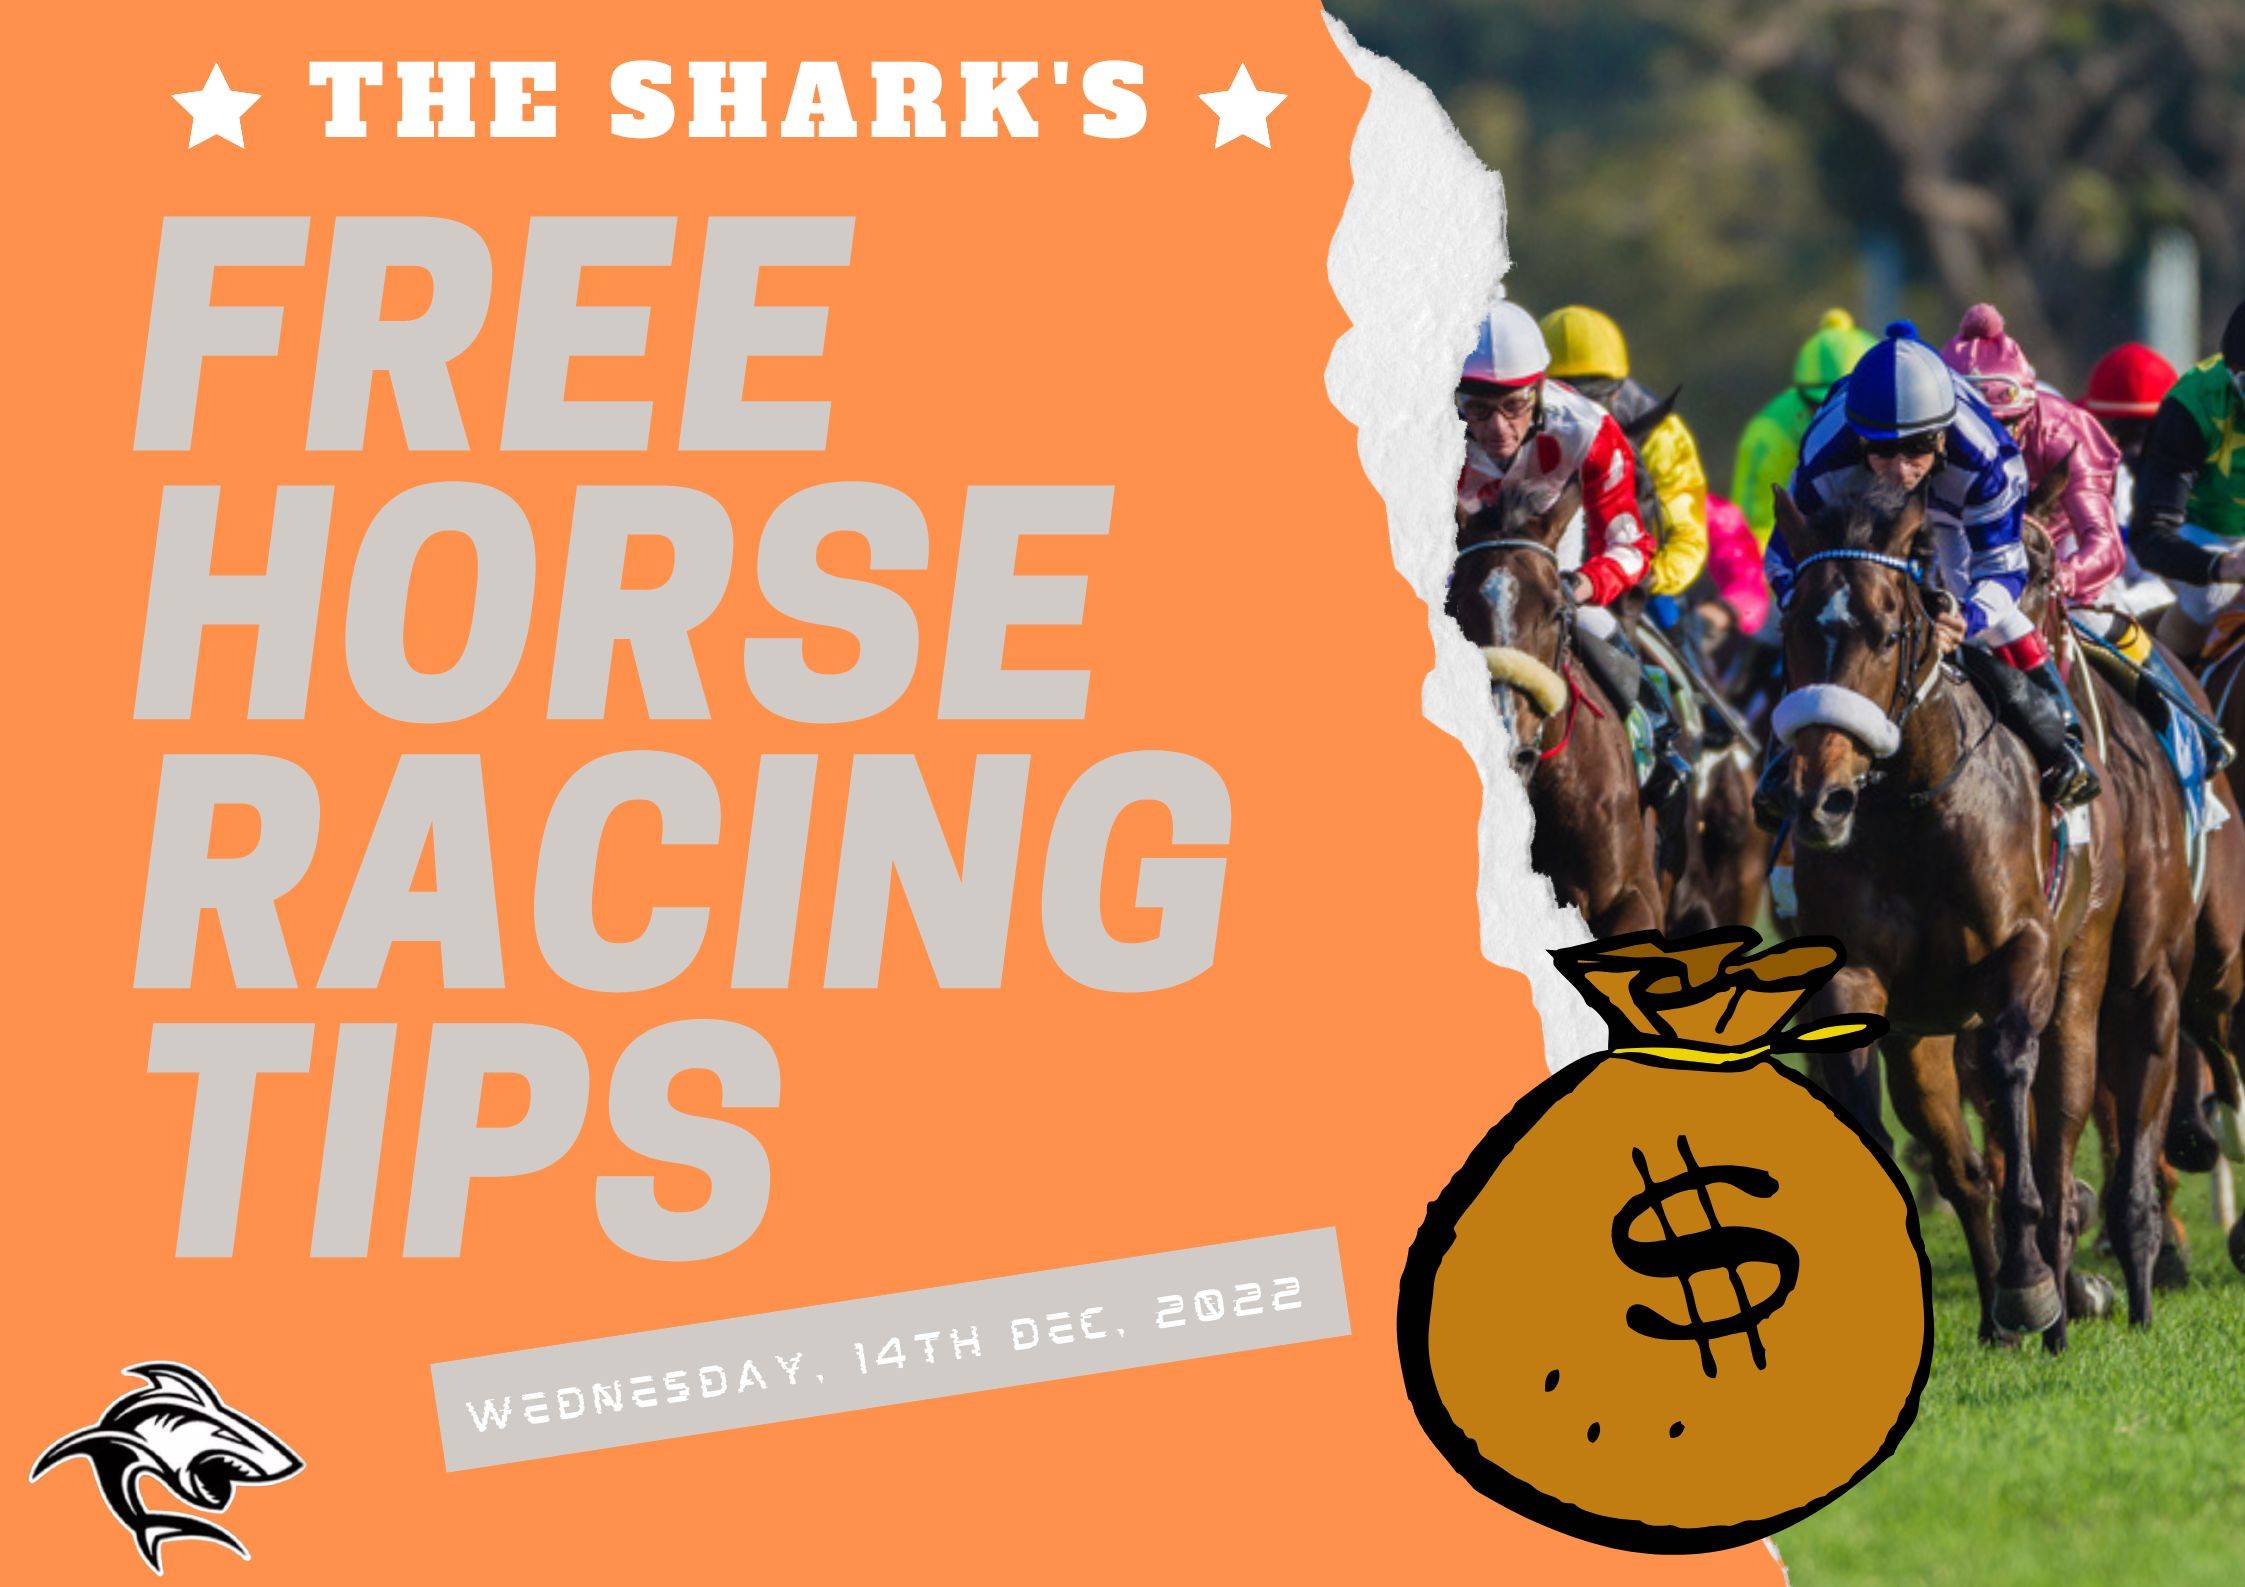 Free Horse Racing Tips - 14th Dec